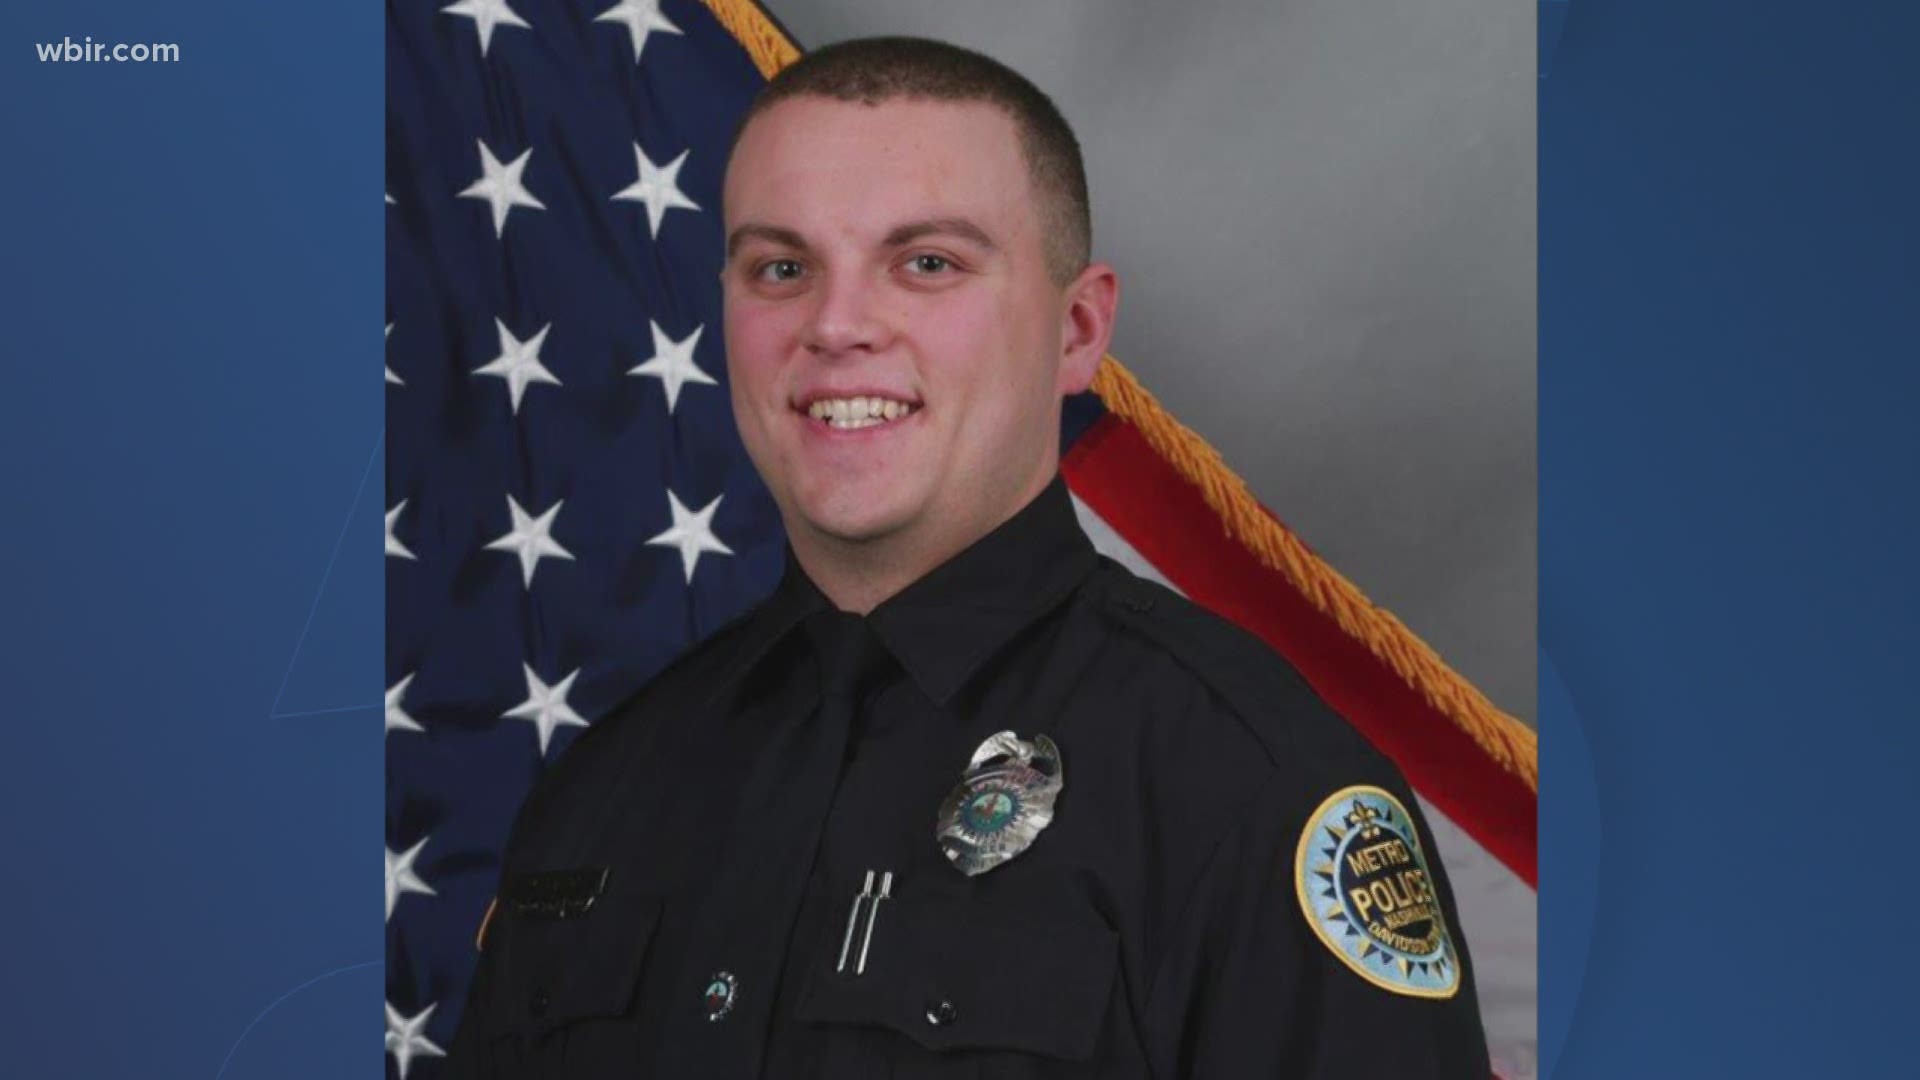 Officer from Knoxville hailed as hero | wbir.com